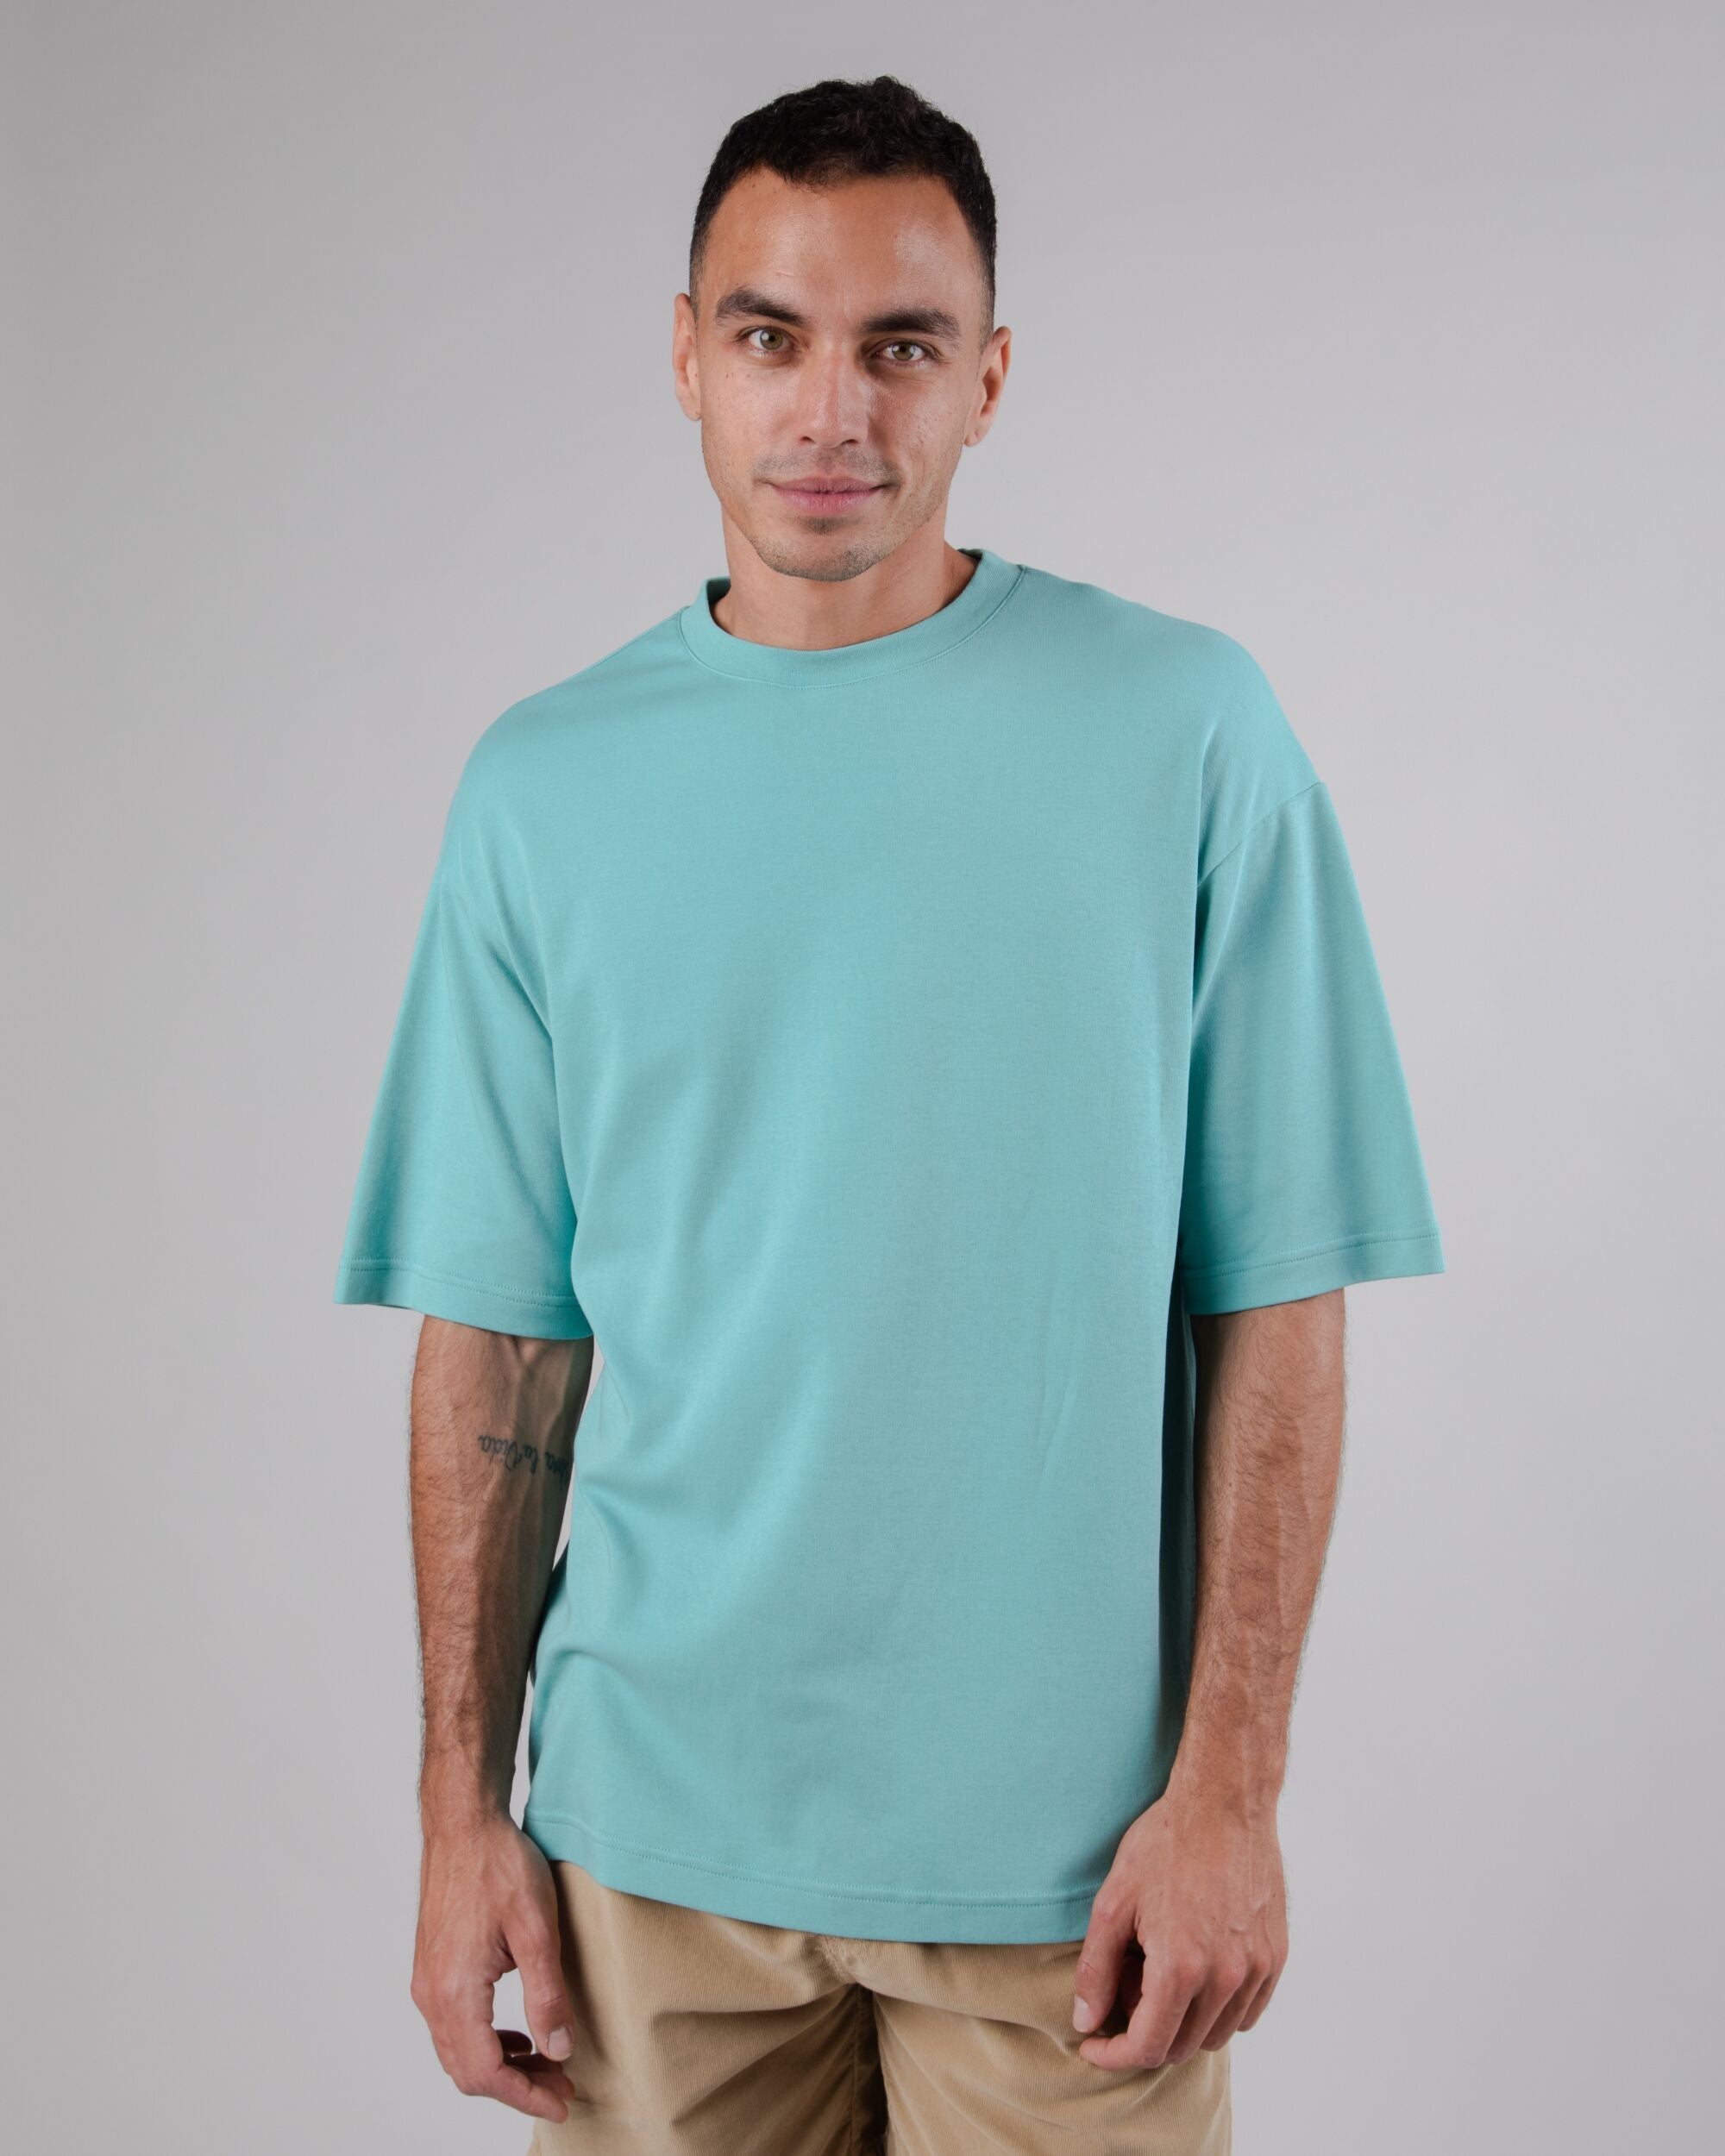 Blue oversize interlock cotton shirt from Brava Fabrics